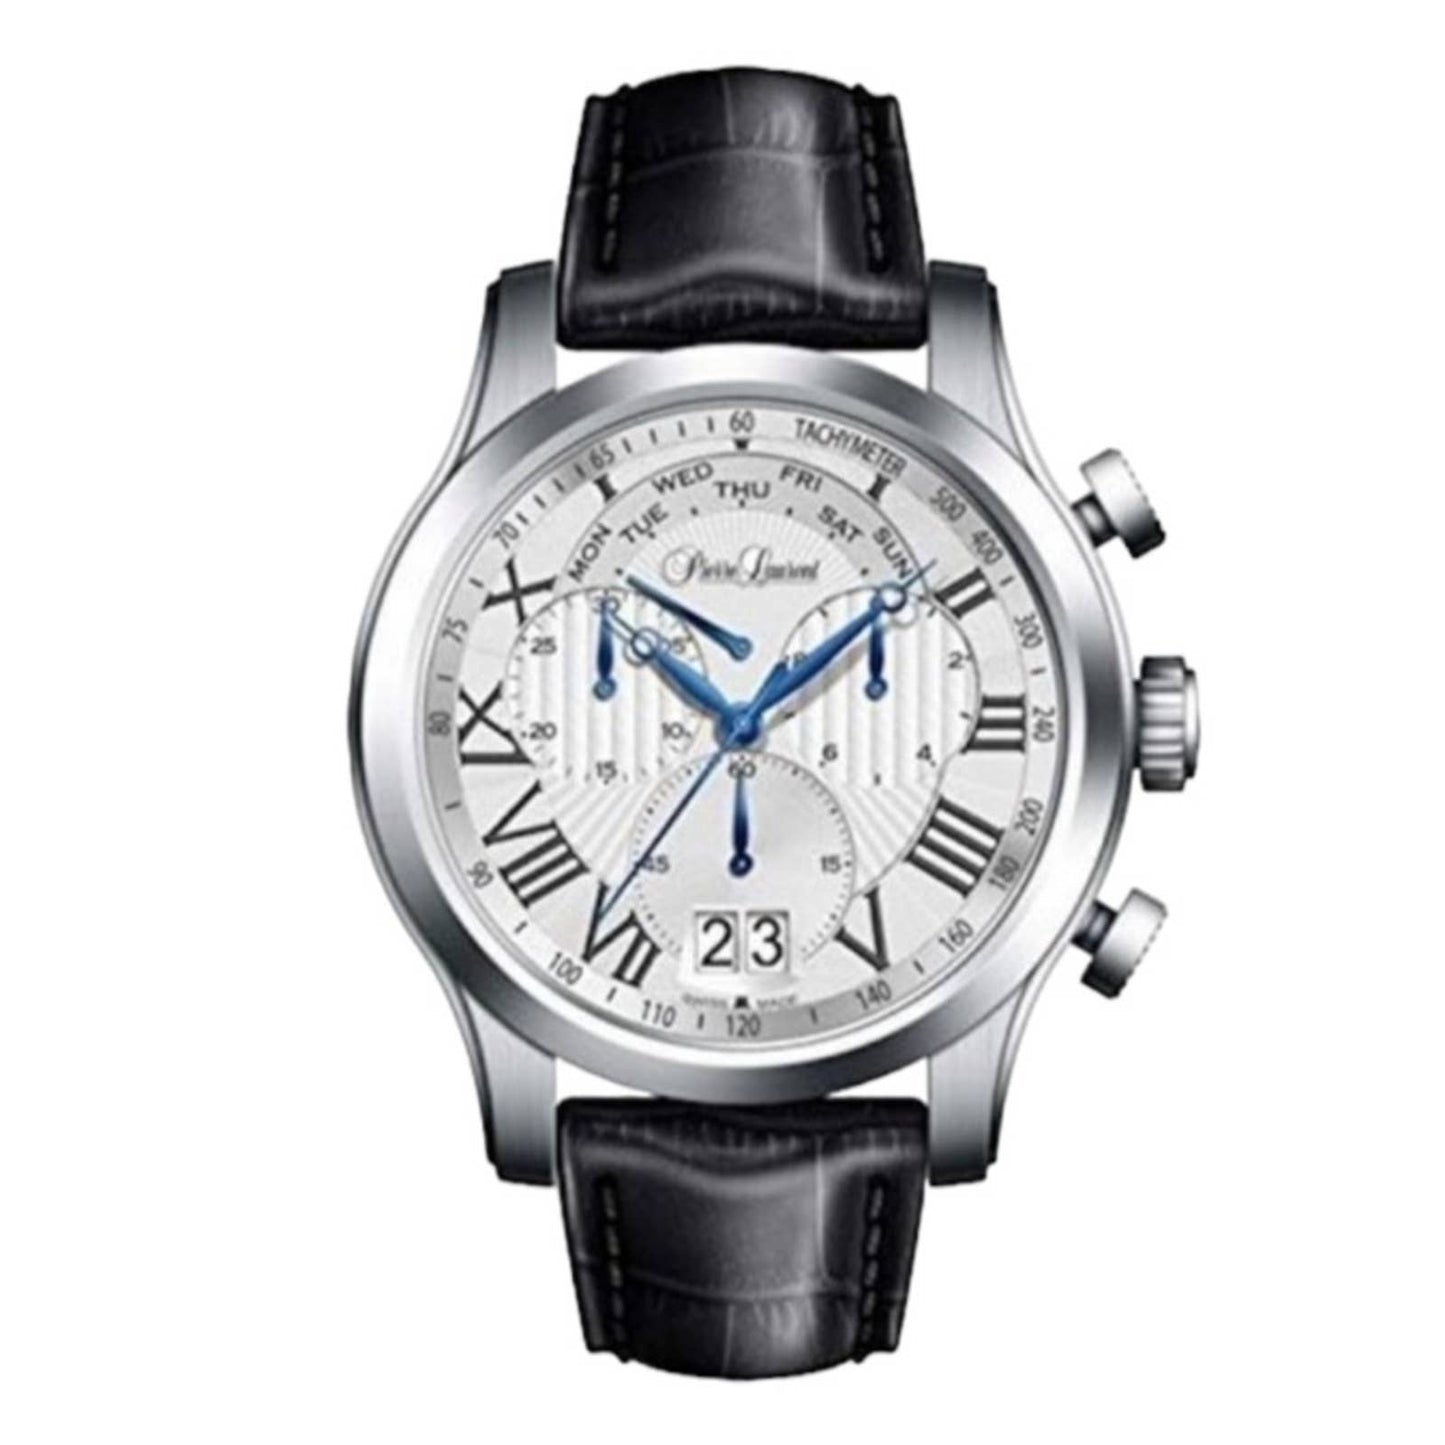 Pierre Laurent Mens Classic Day Retrograde Chronograph Watch